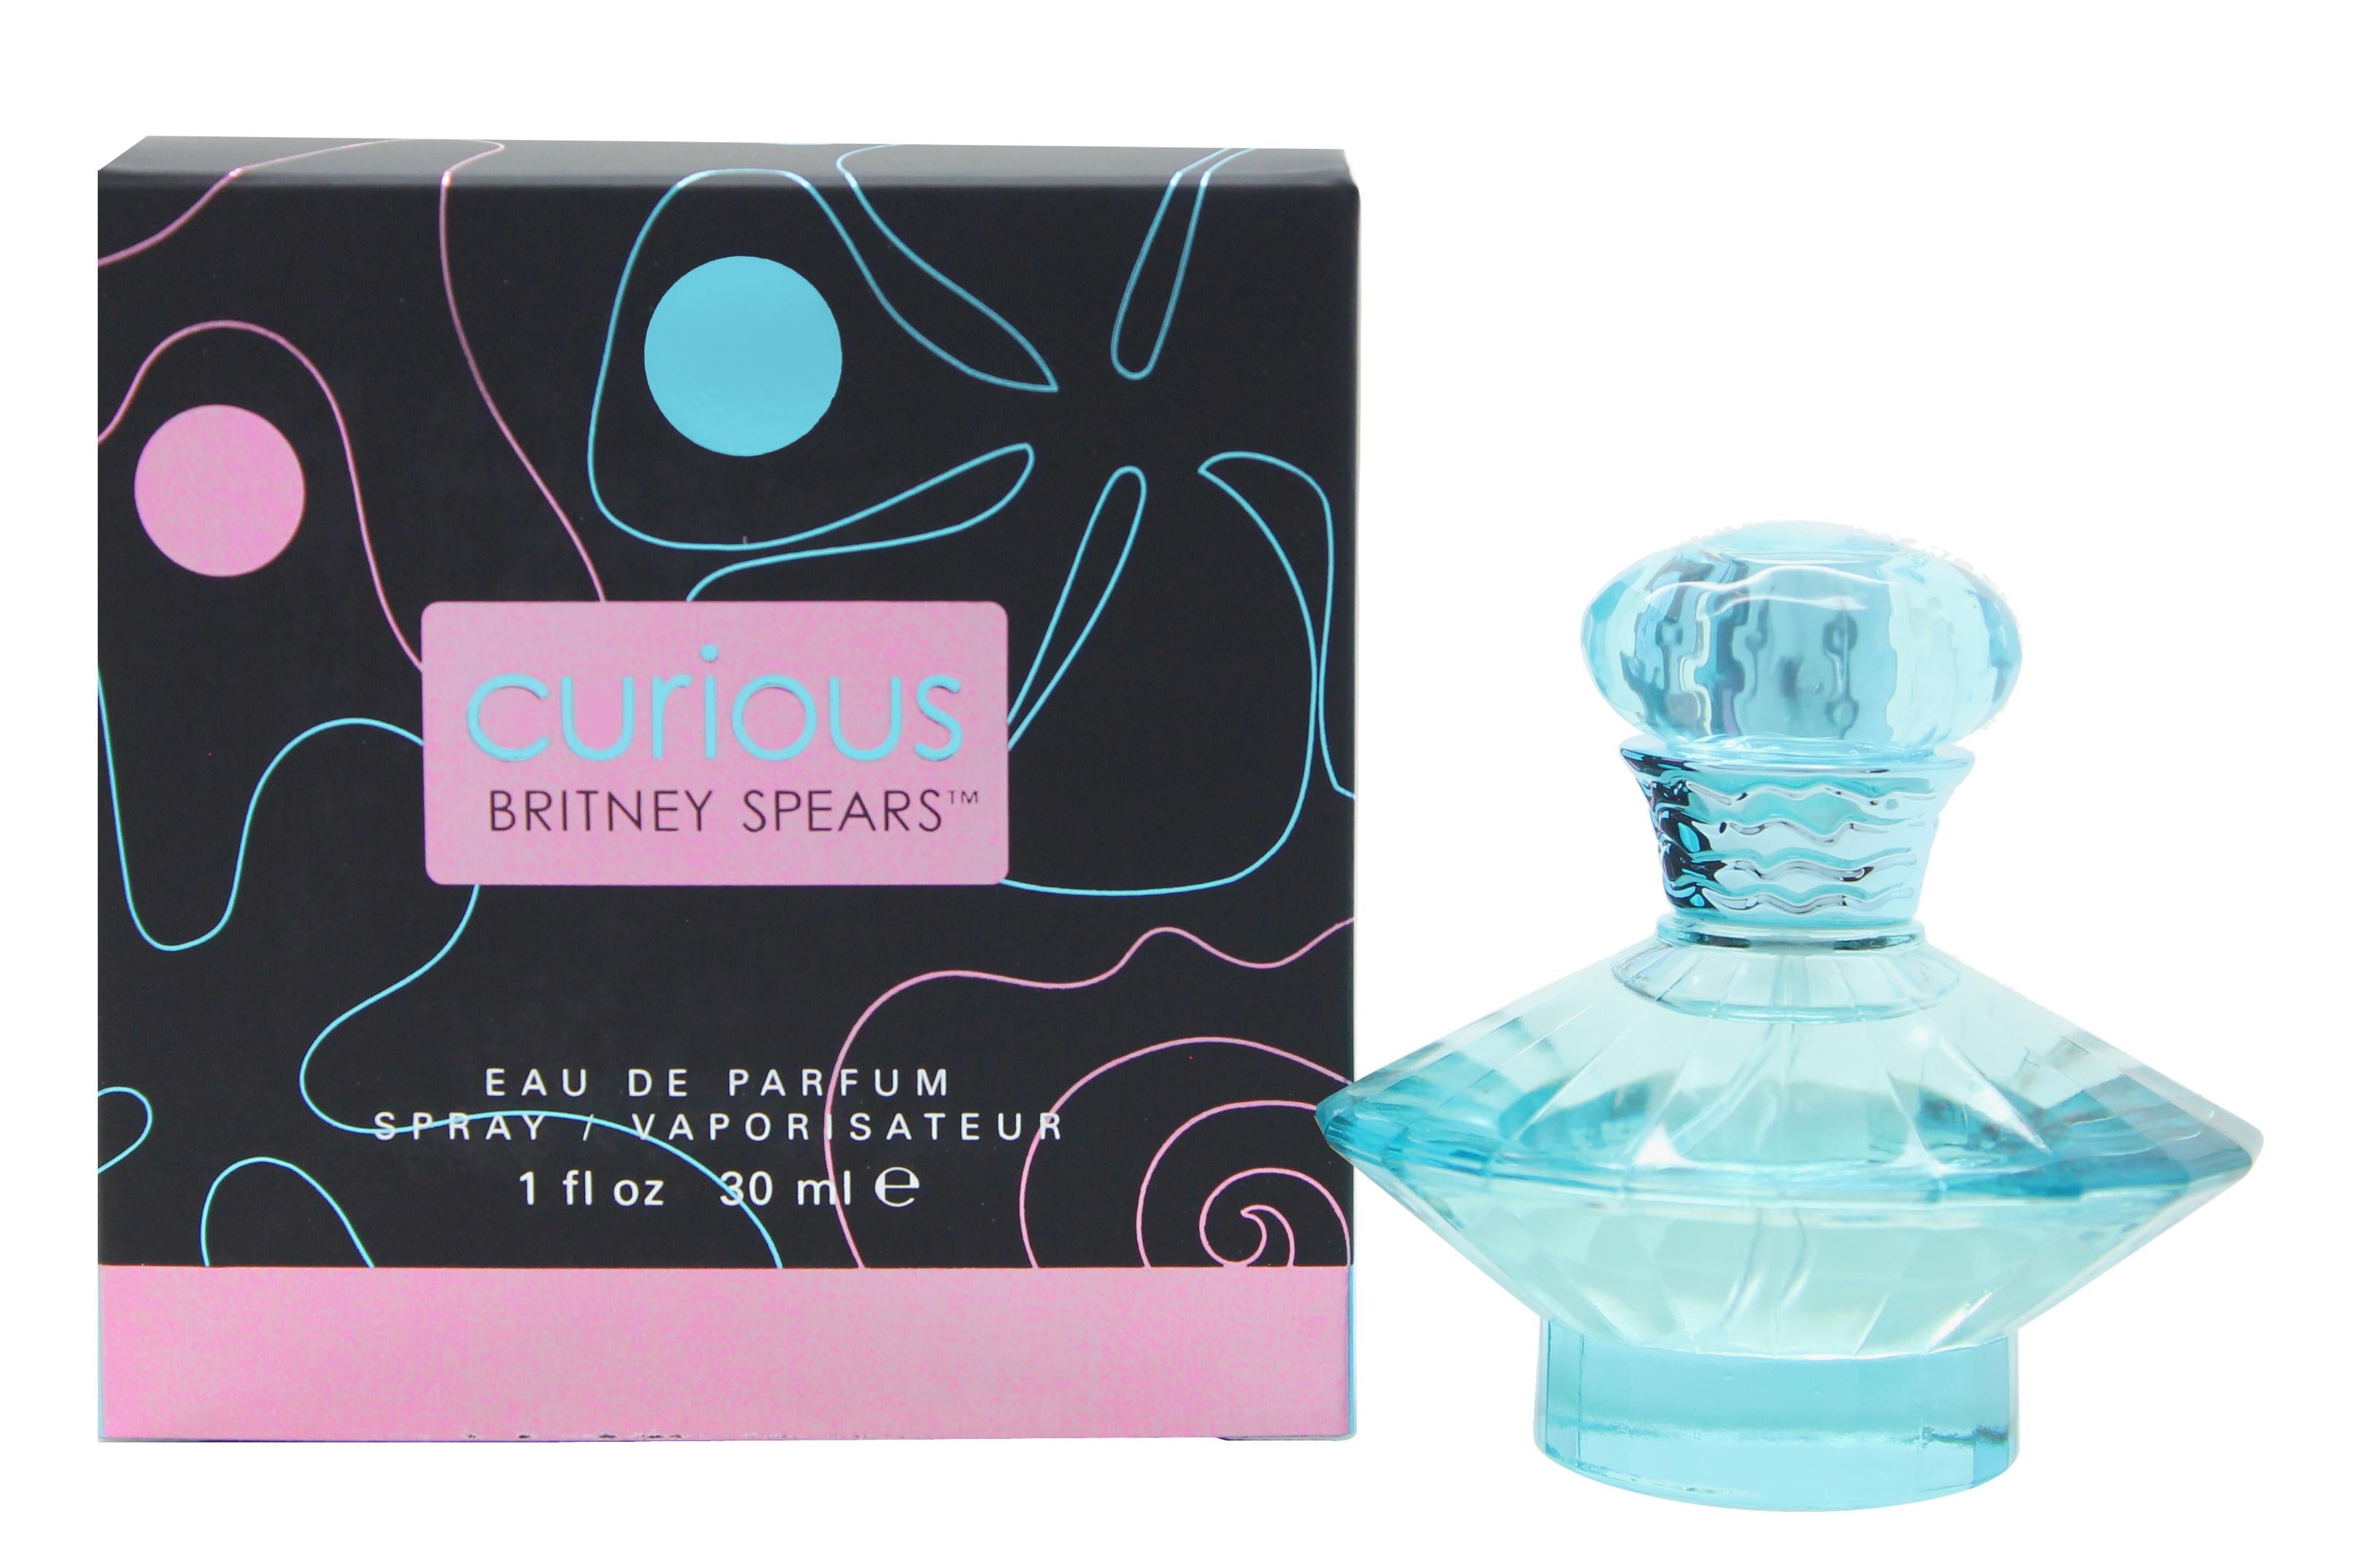 View Britney Spears Curious Eau de Parfum 30ml Spray information